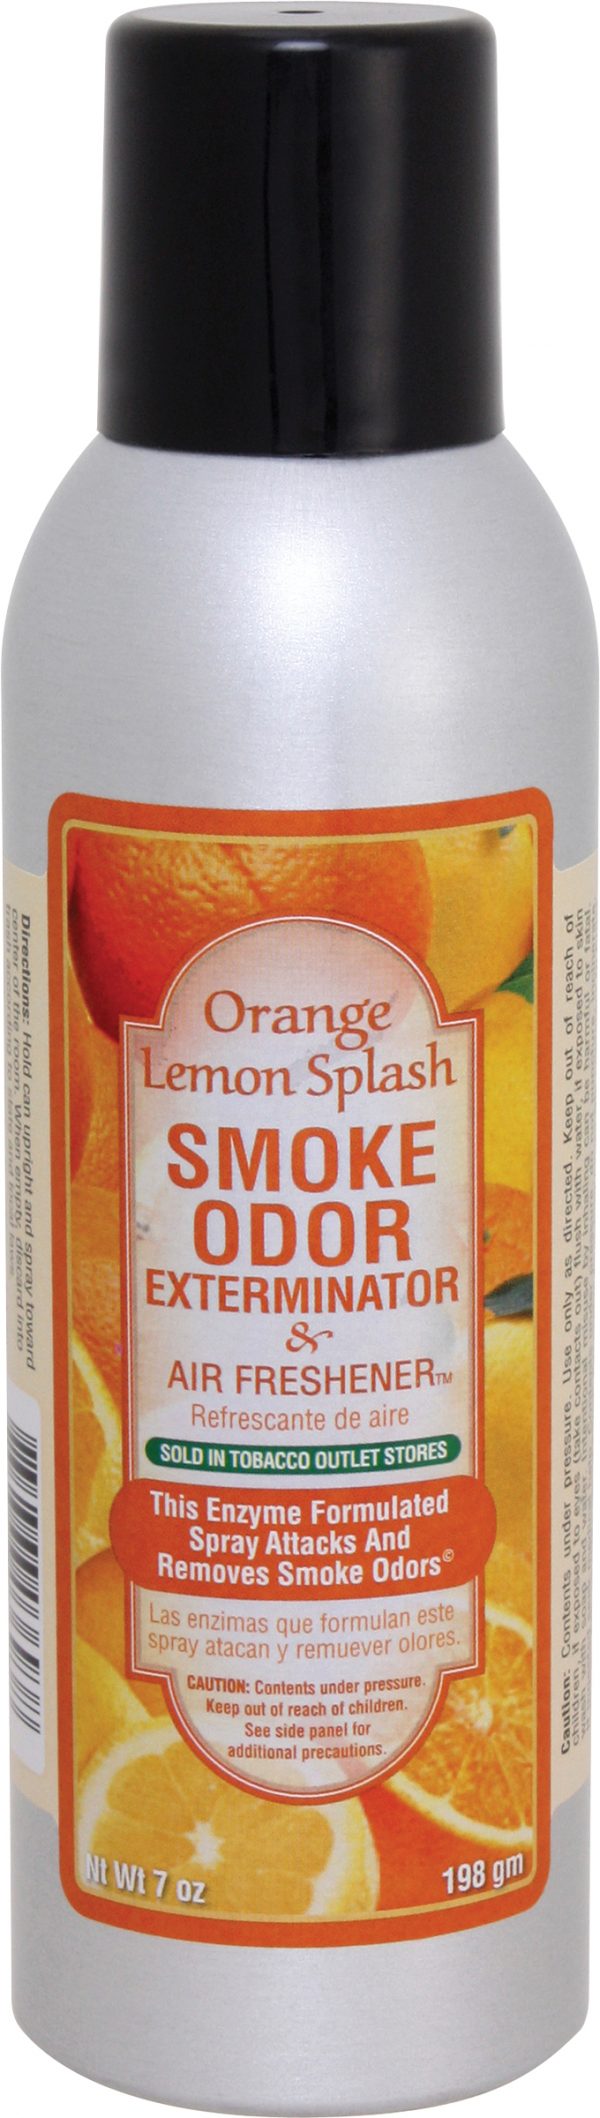 smoke odor exterminator spray bottle orange lemon splash